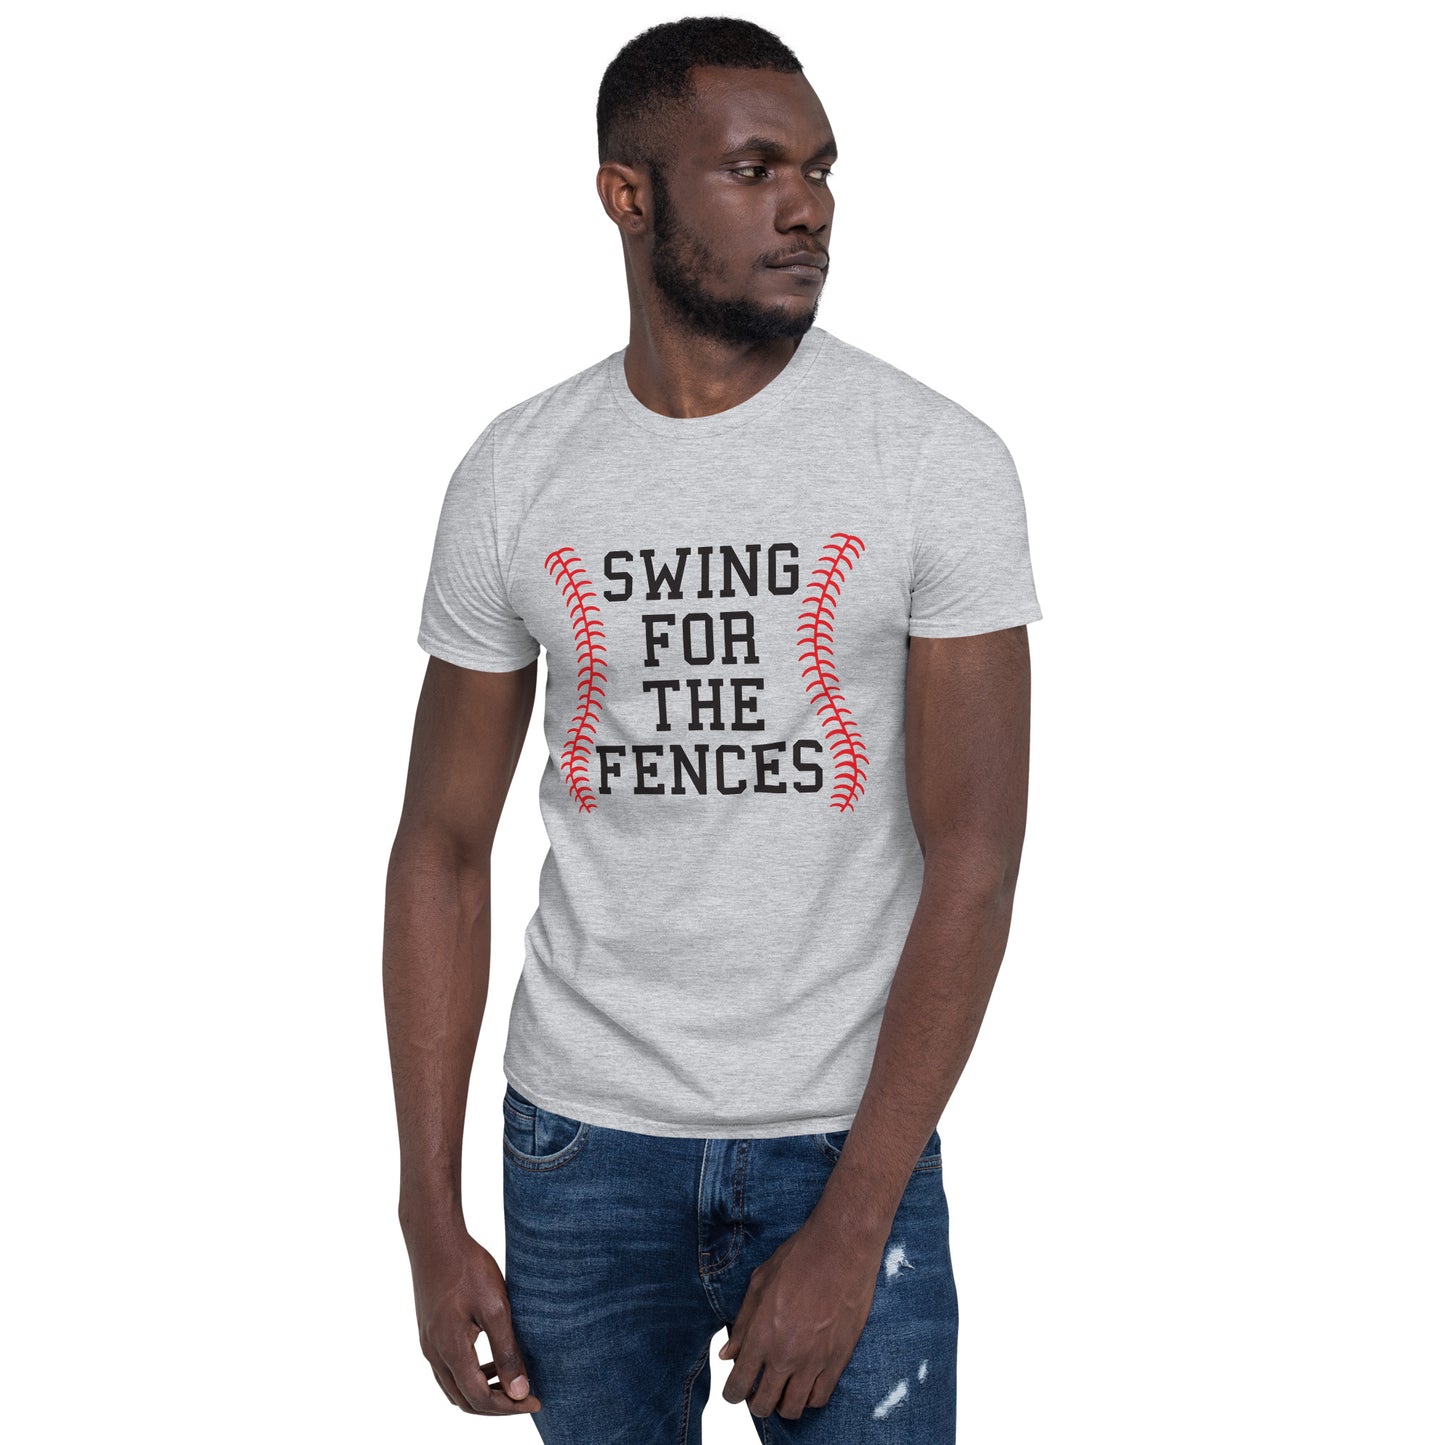 Swing For The Fences Premium Unisex T-Shirt